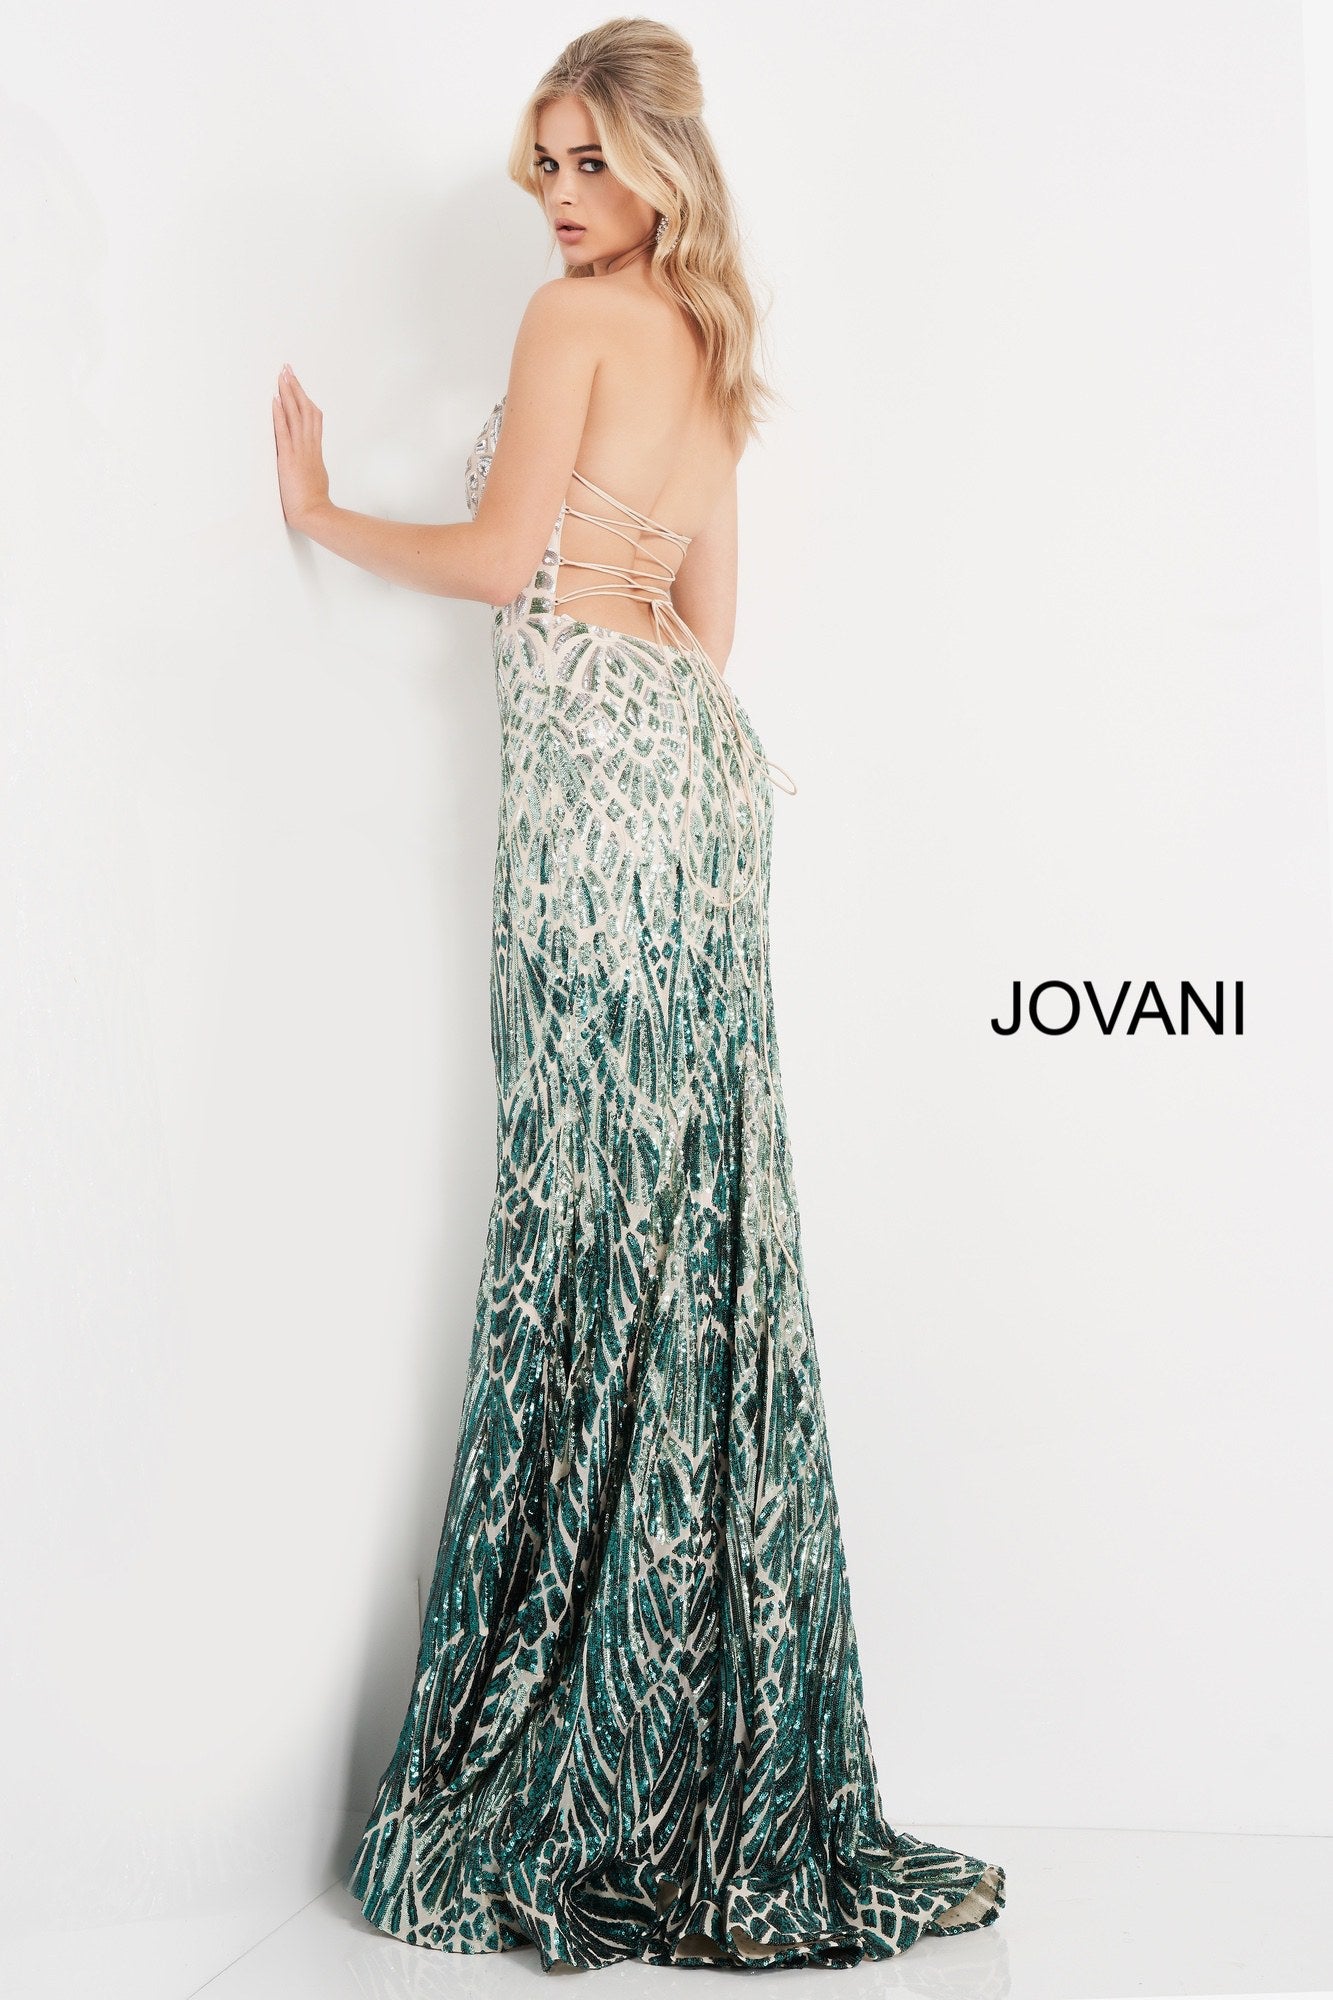 Embellished Strapless Prom Dress By Jovani -06459